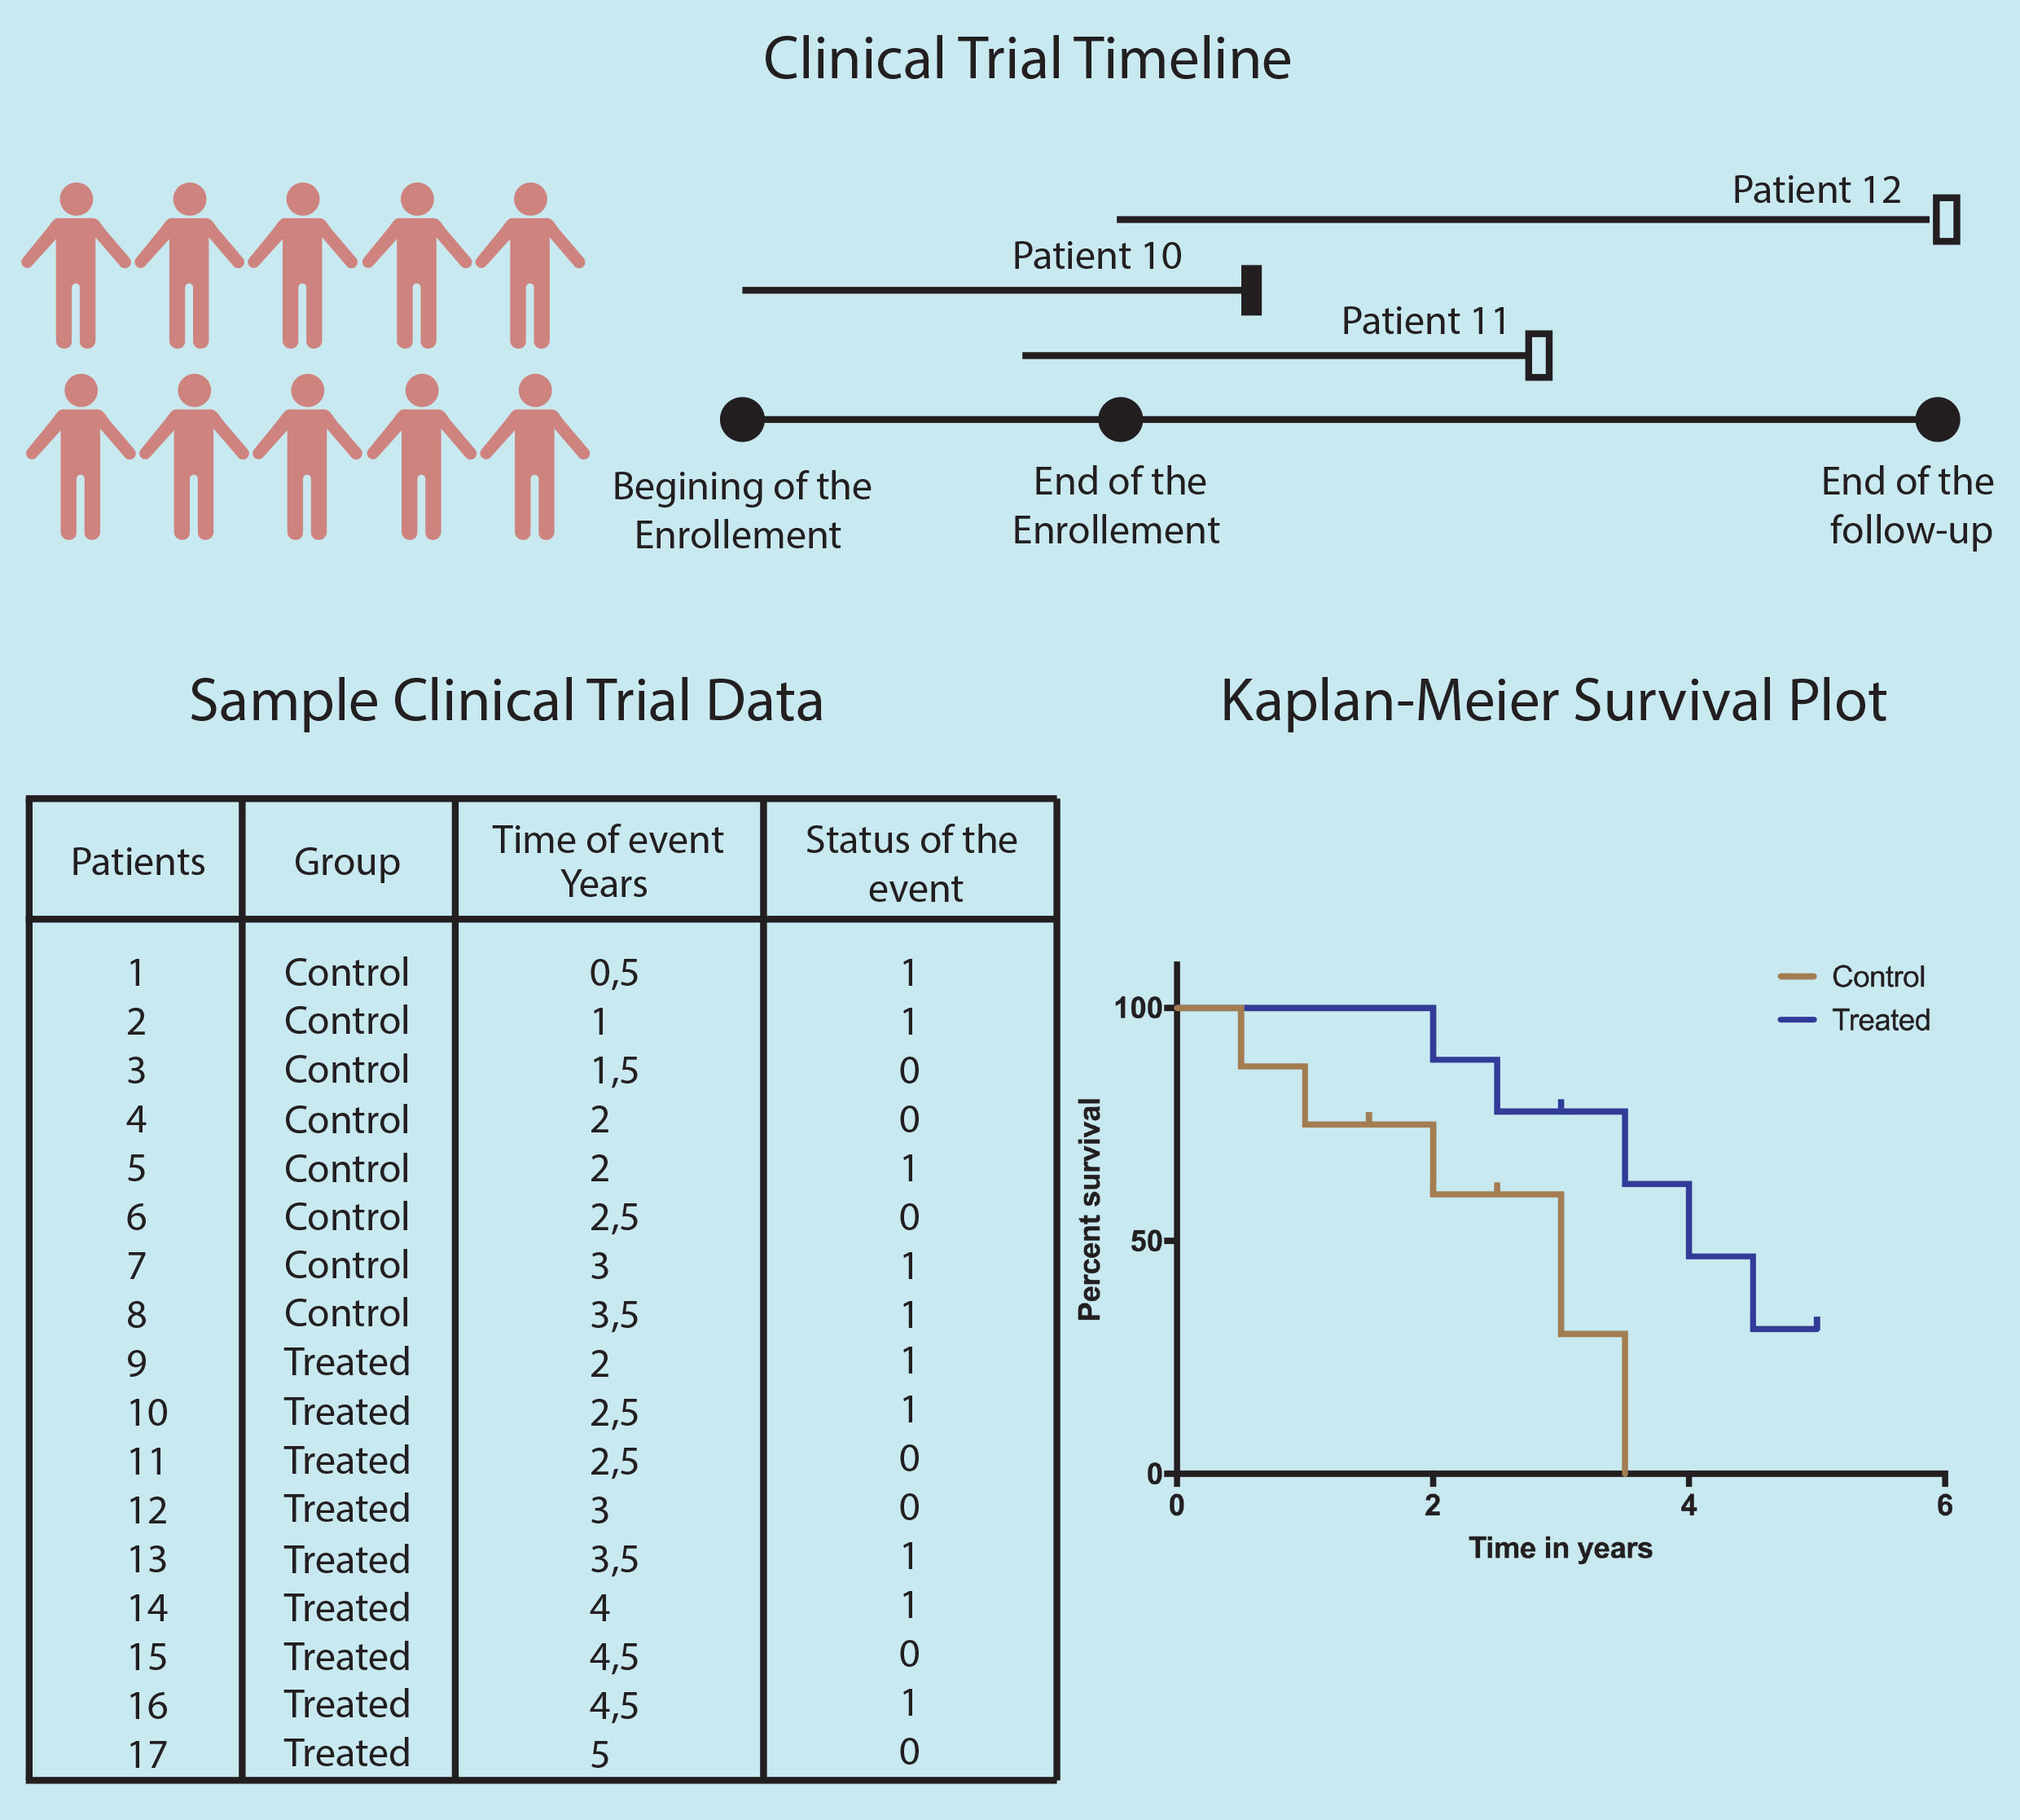 Kaplan-Meier plot and the survival statistics